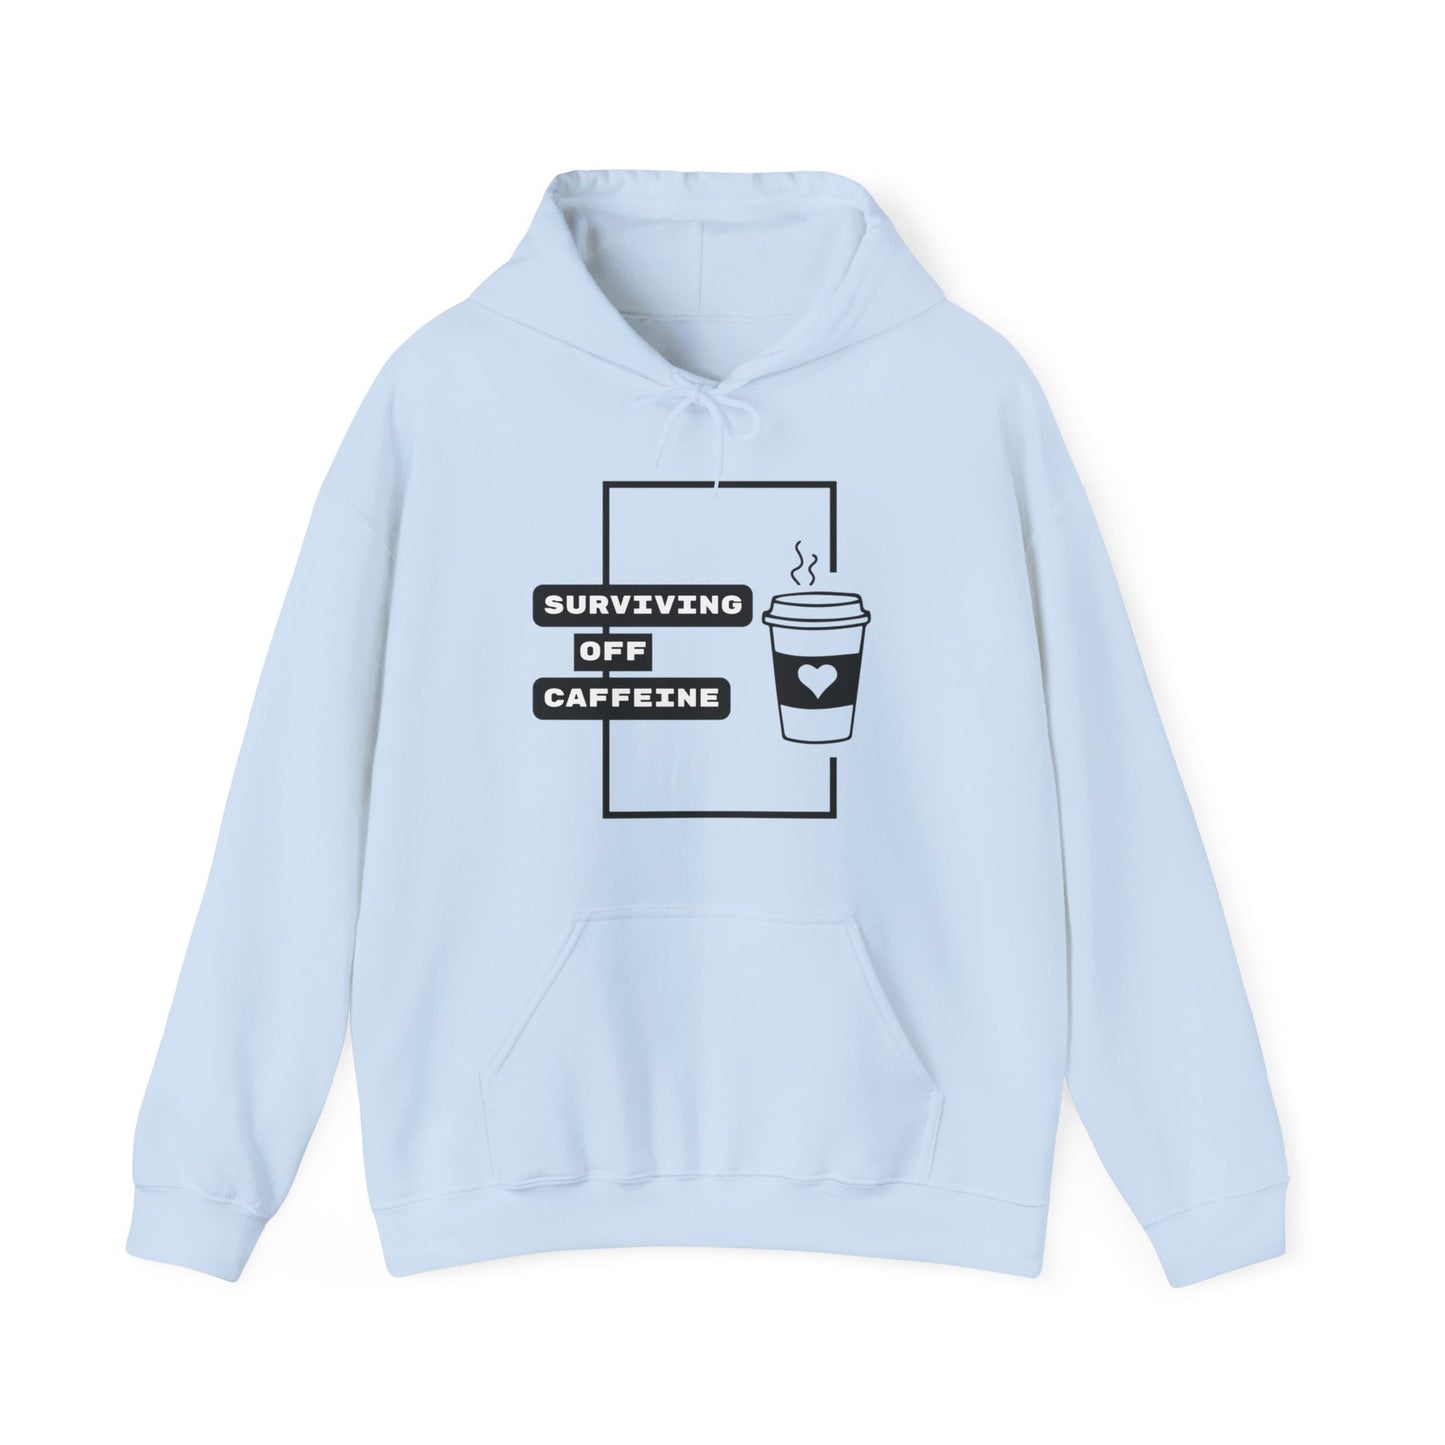 Surviving Off Caffeine - Adult Unisex Hooded Sweatshirt